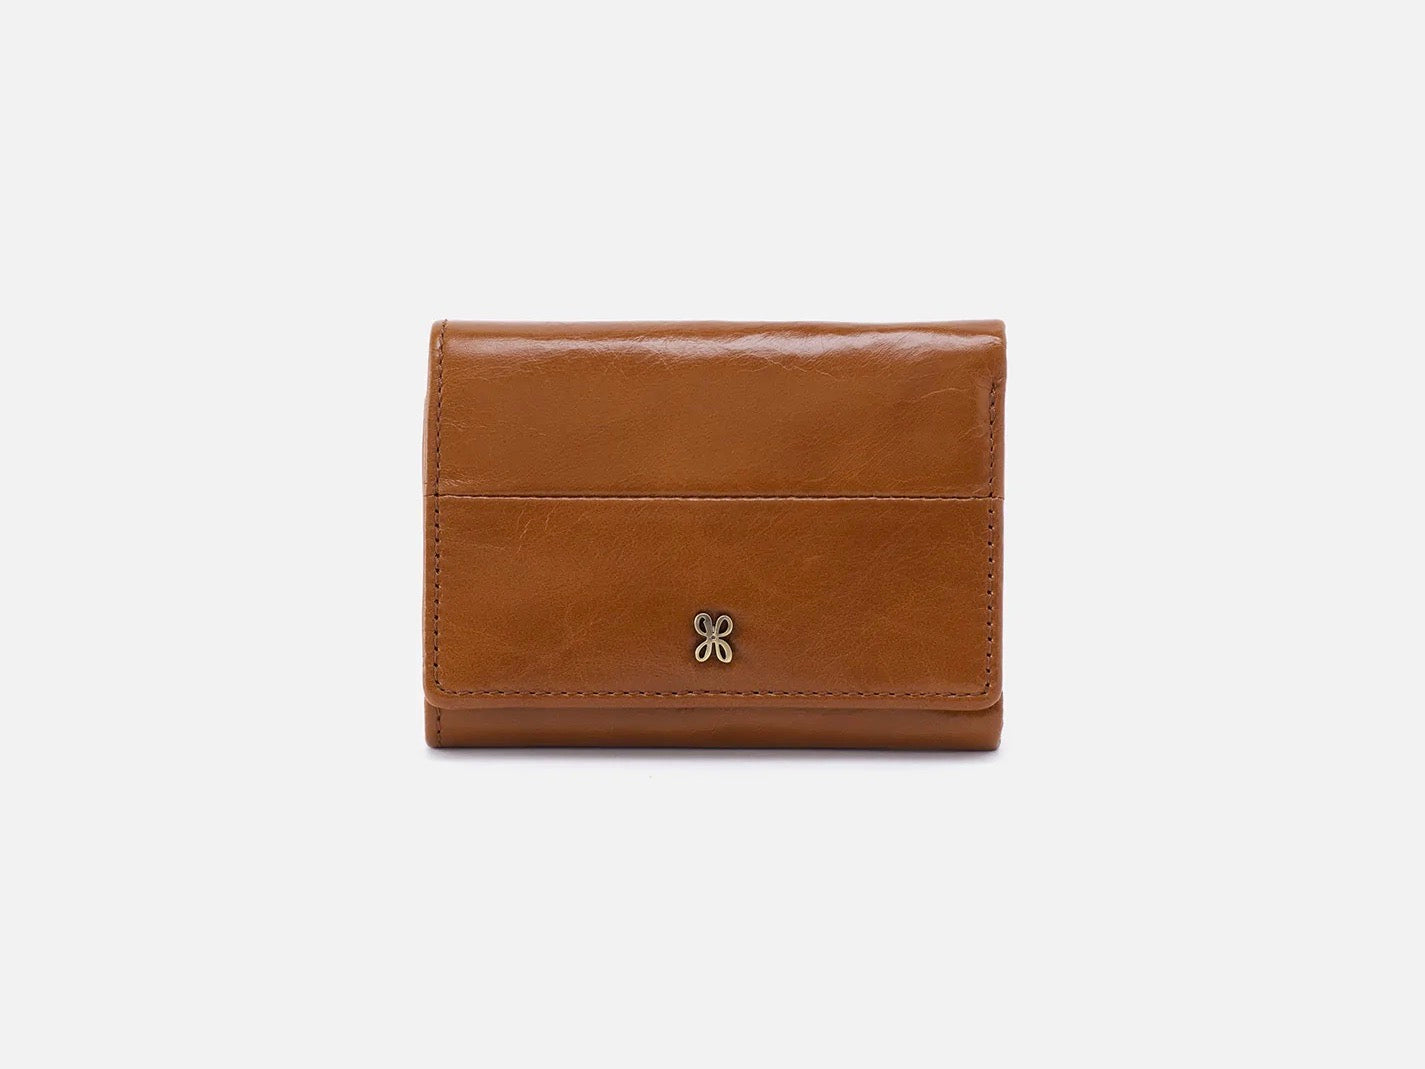 Hobo Leather Bifold Wallet